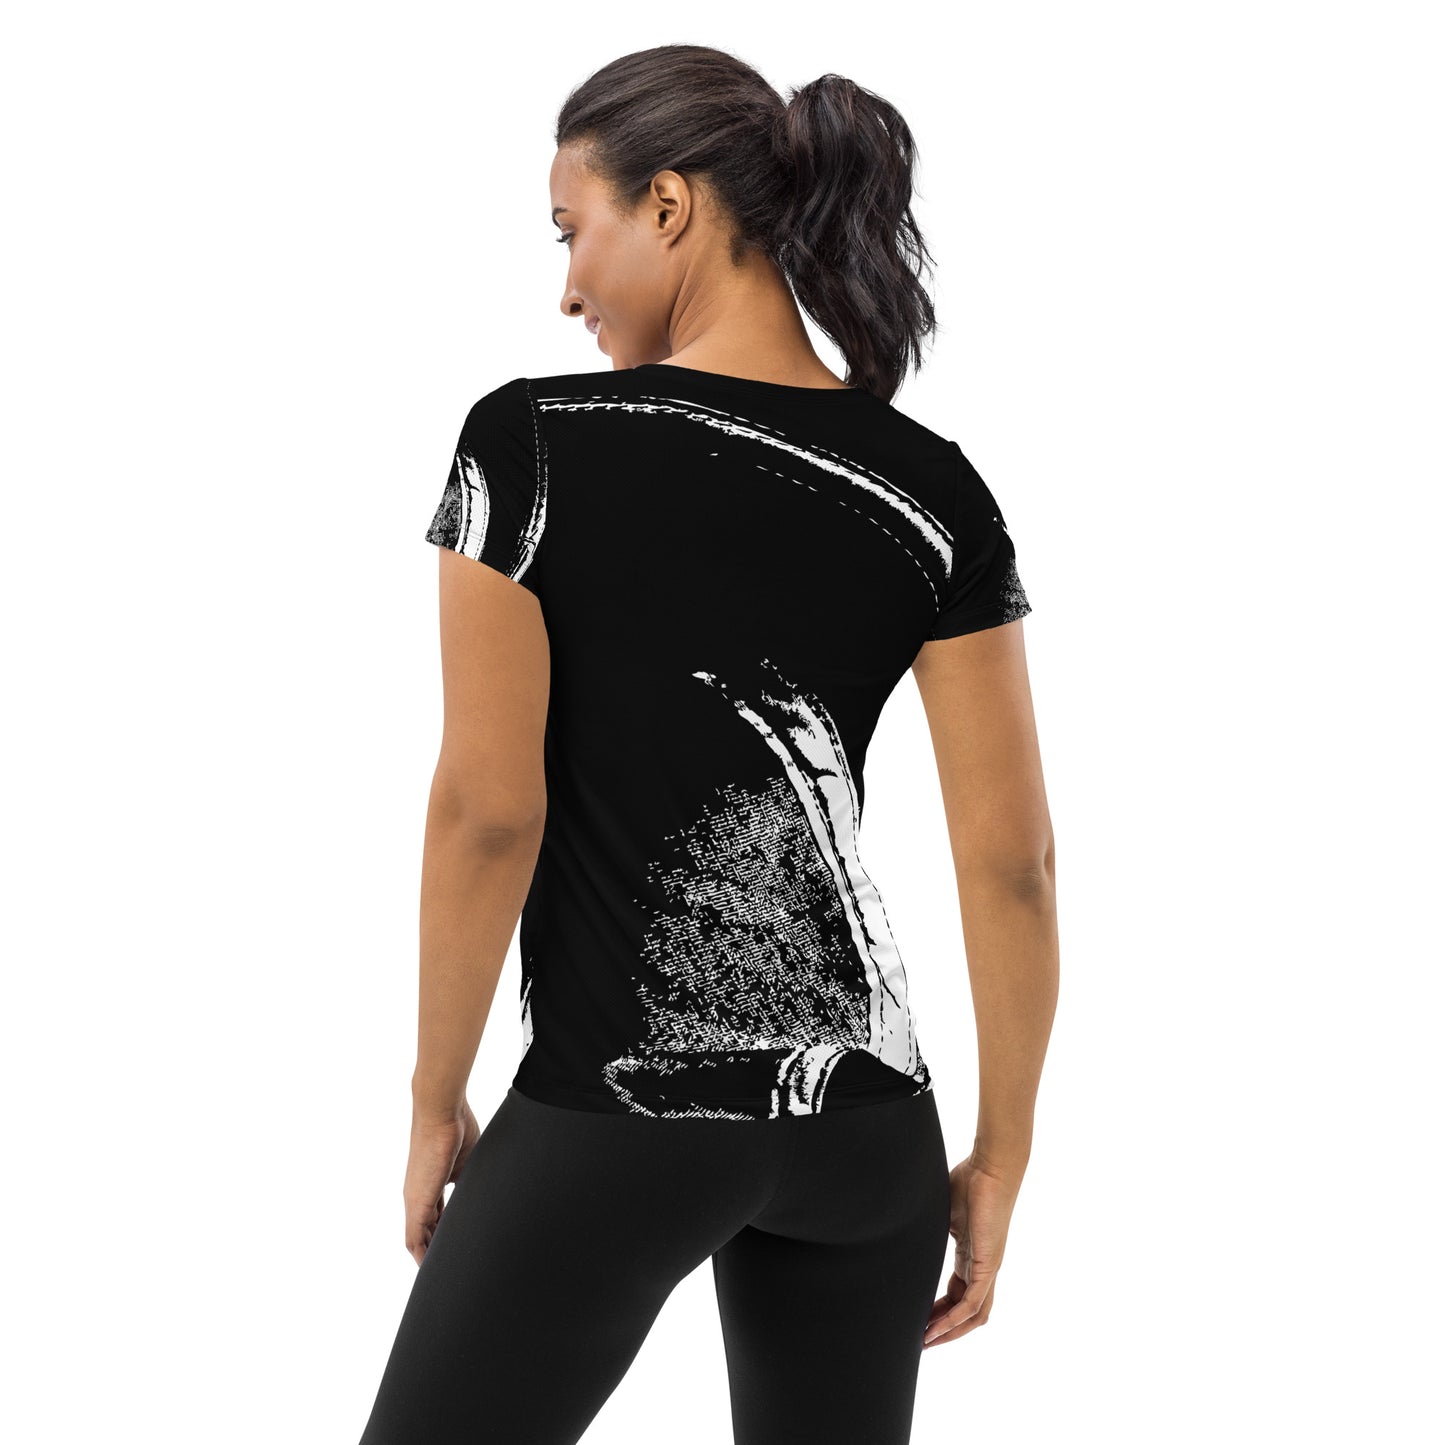 AZONTO Women's Athletic T-shirt